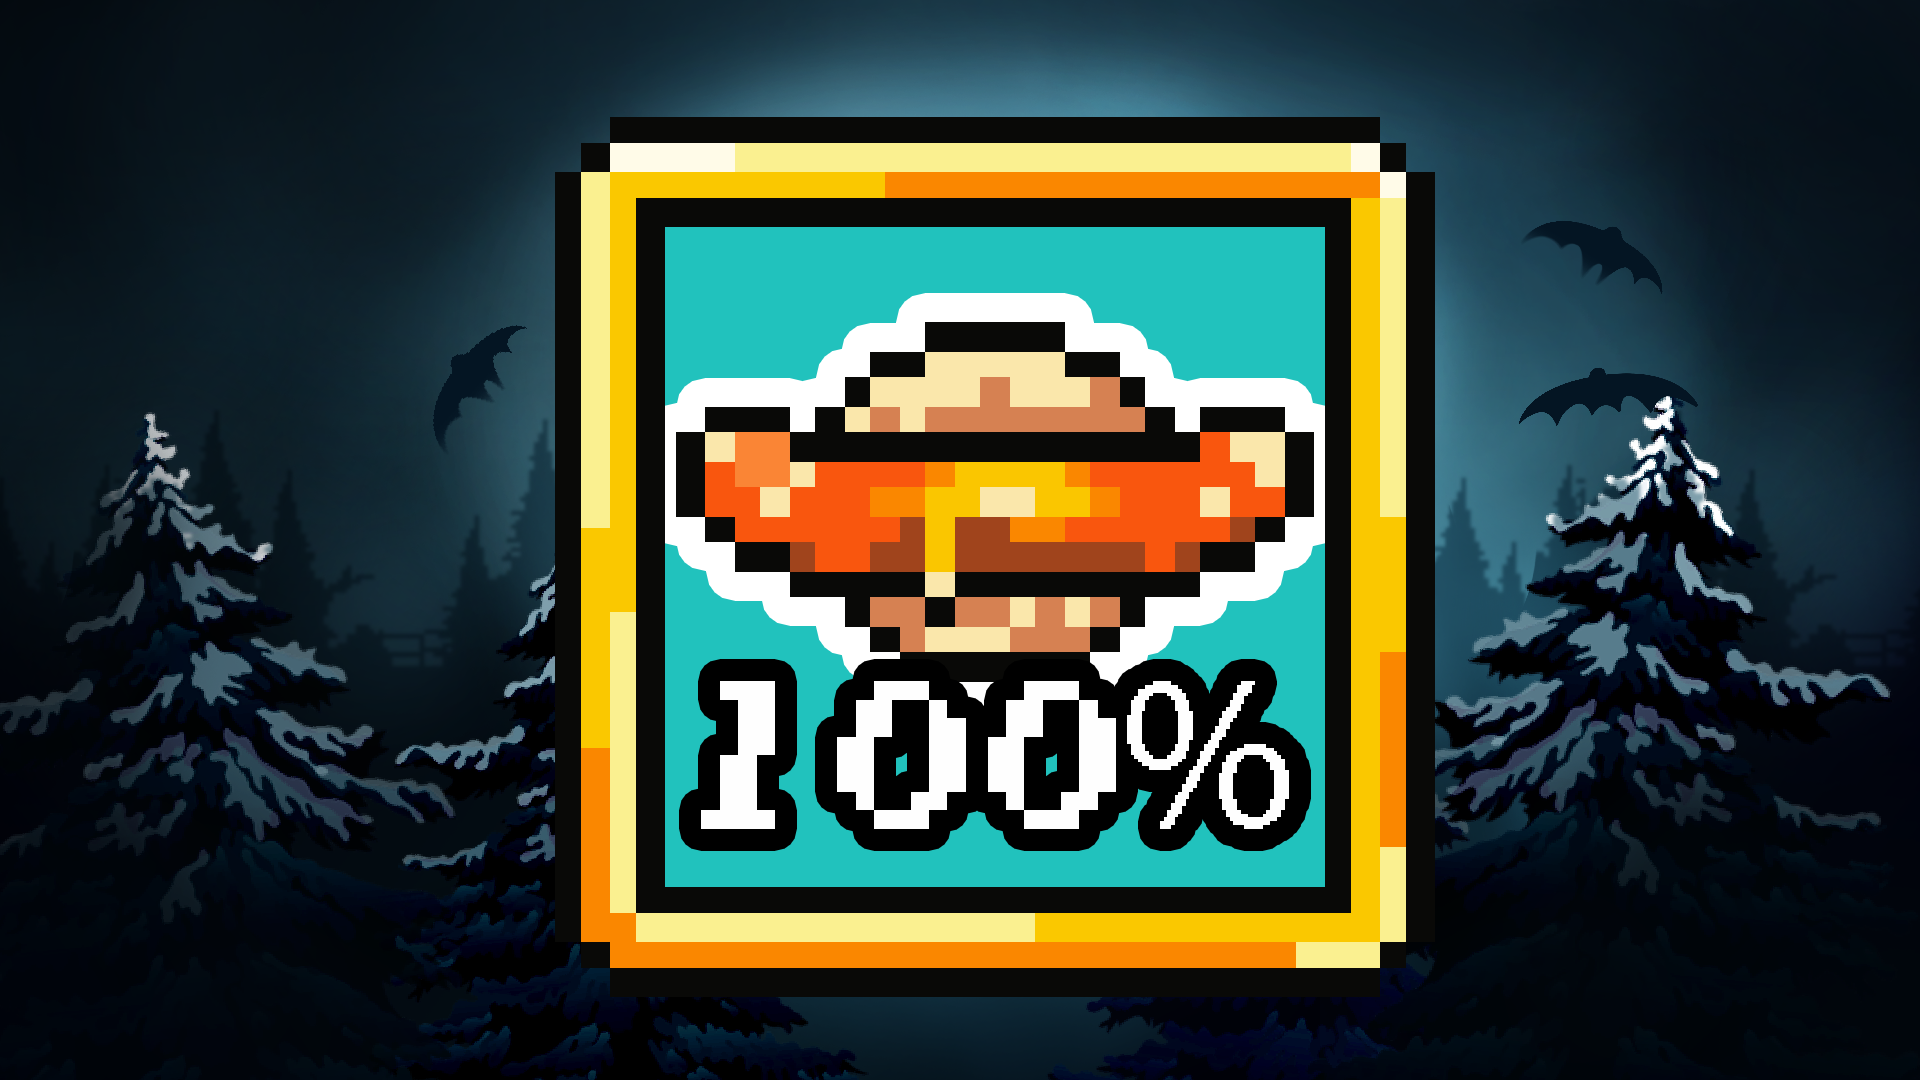 Icon for Score 100%